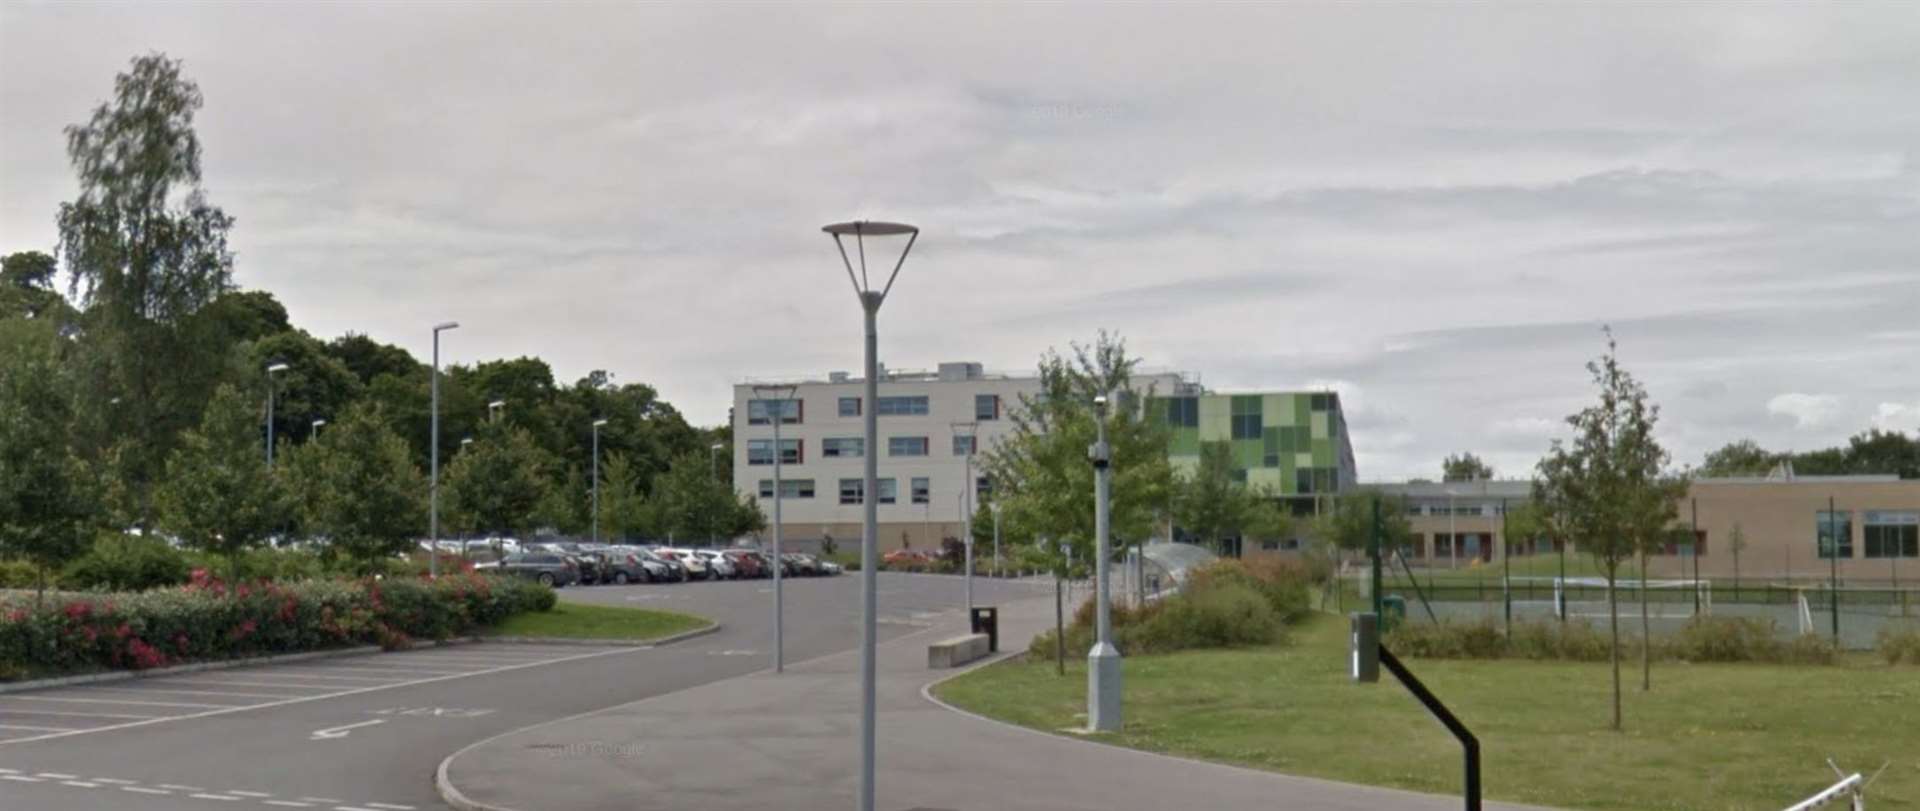 Cornwallis Academy, Loose, Maidstone. Picture: Google Street View